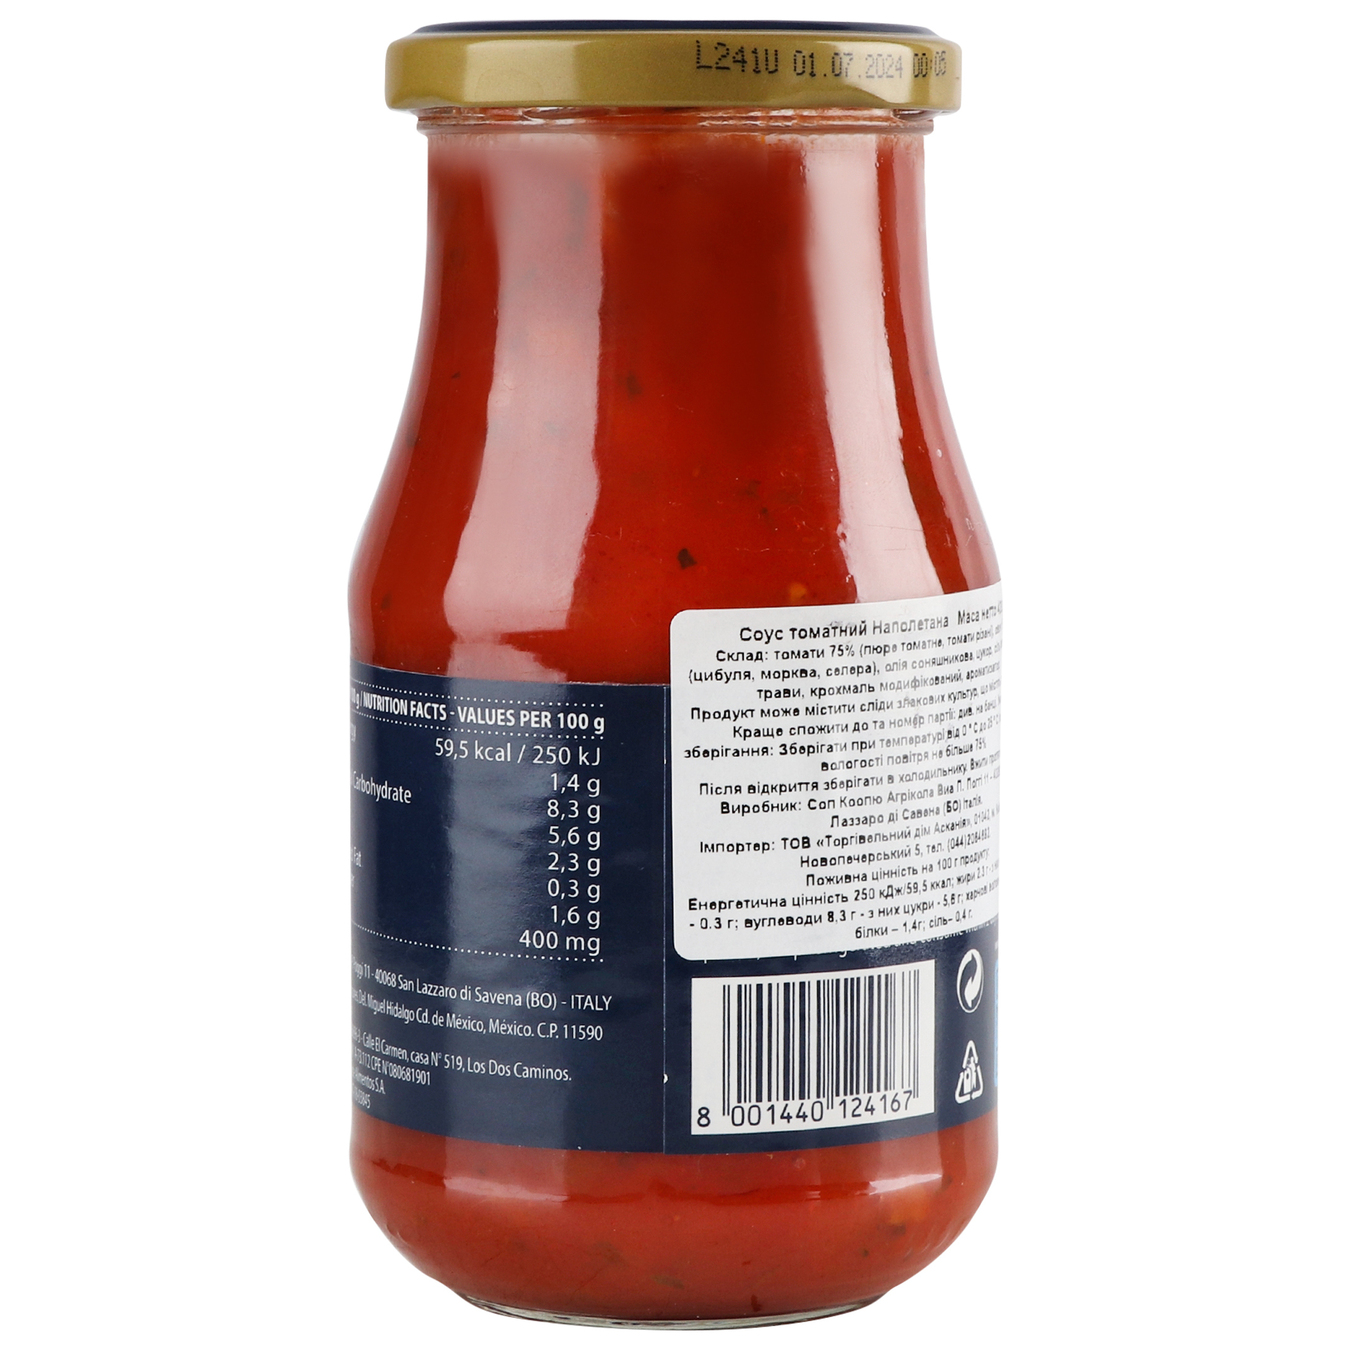 Cirio Napoletana tomato sauce 420g 2